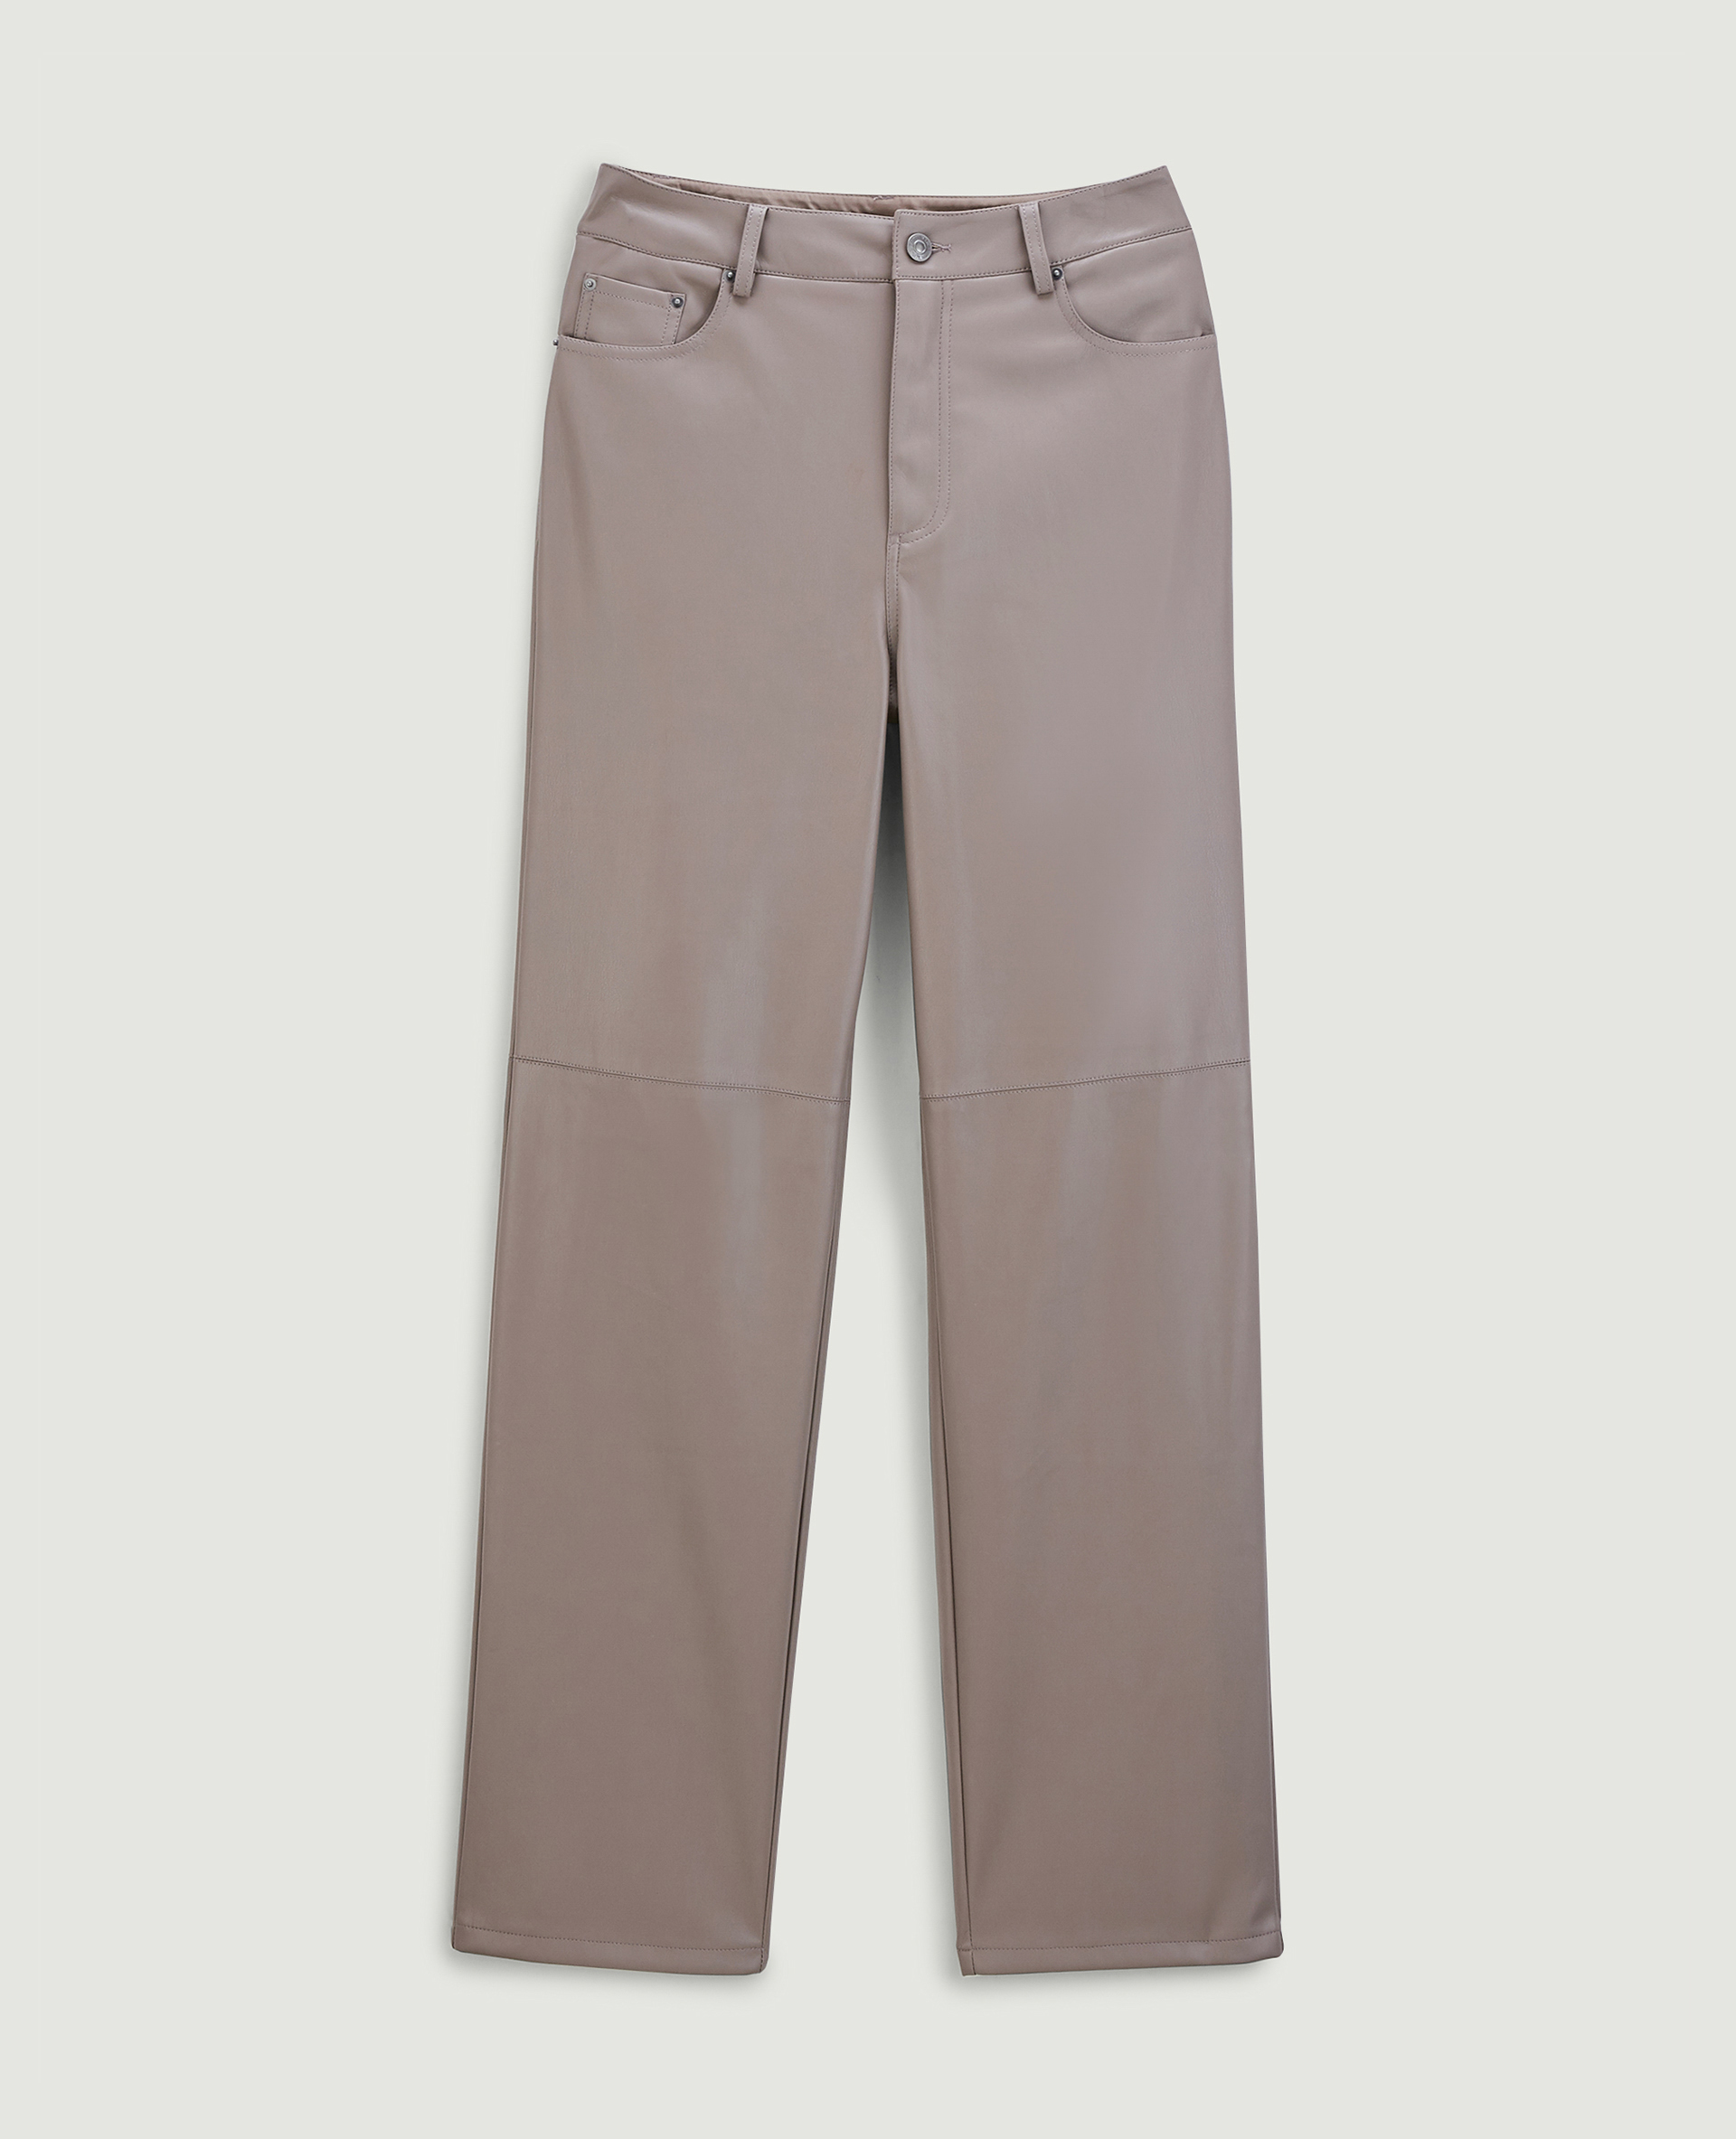 Pantalon droit en simili cuir brun - Pimkie